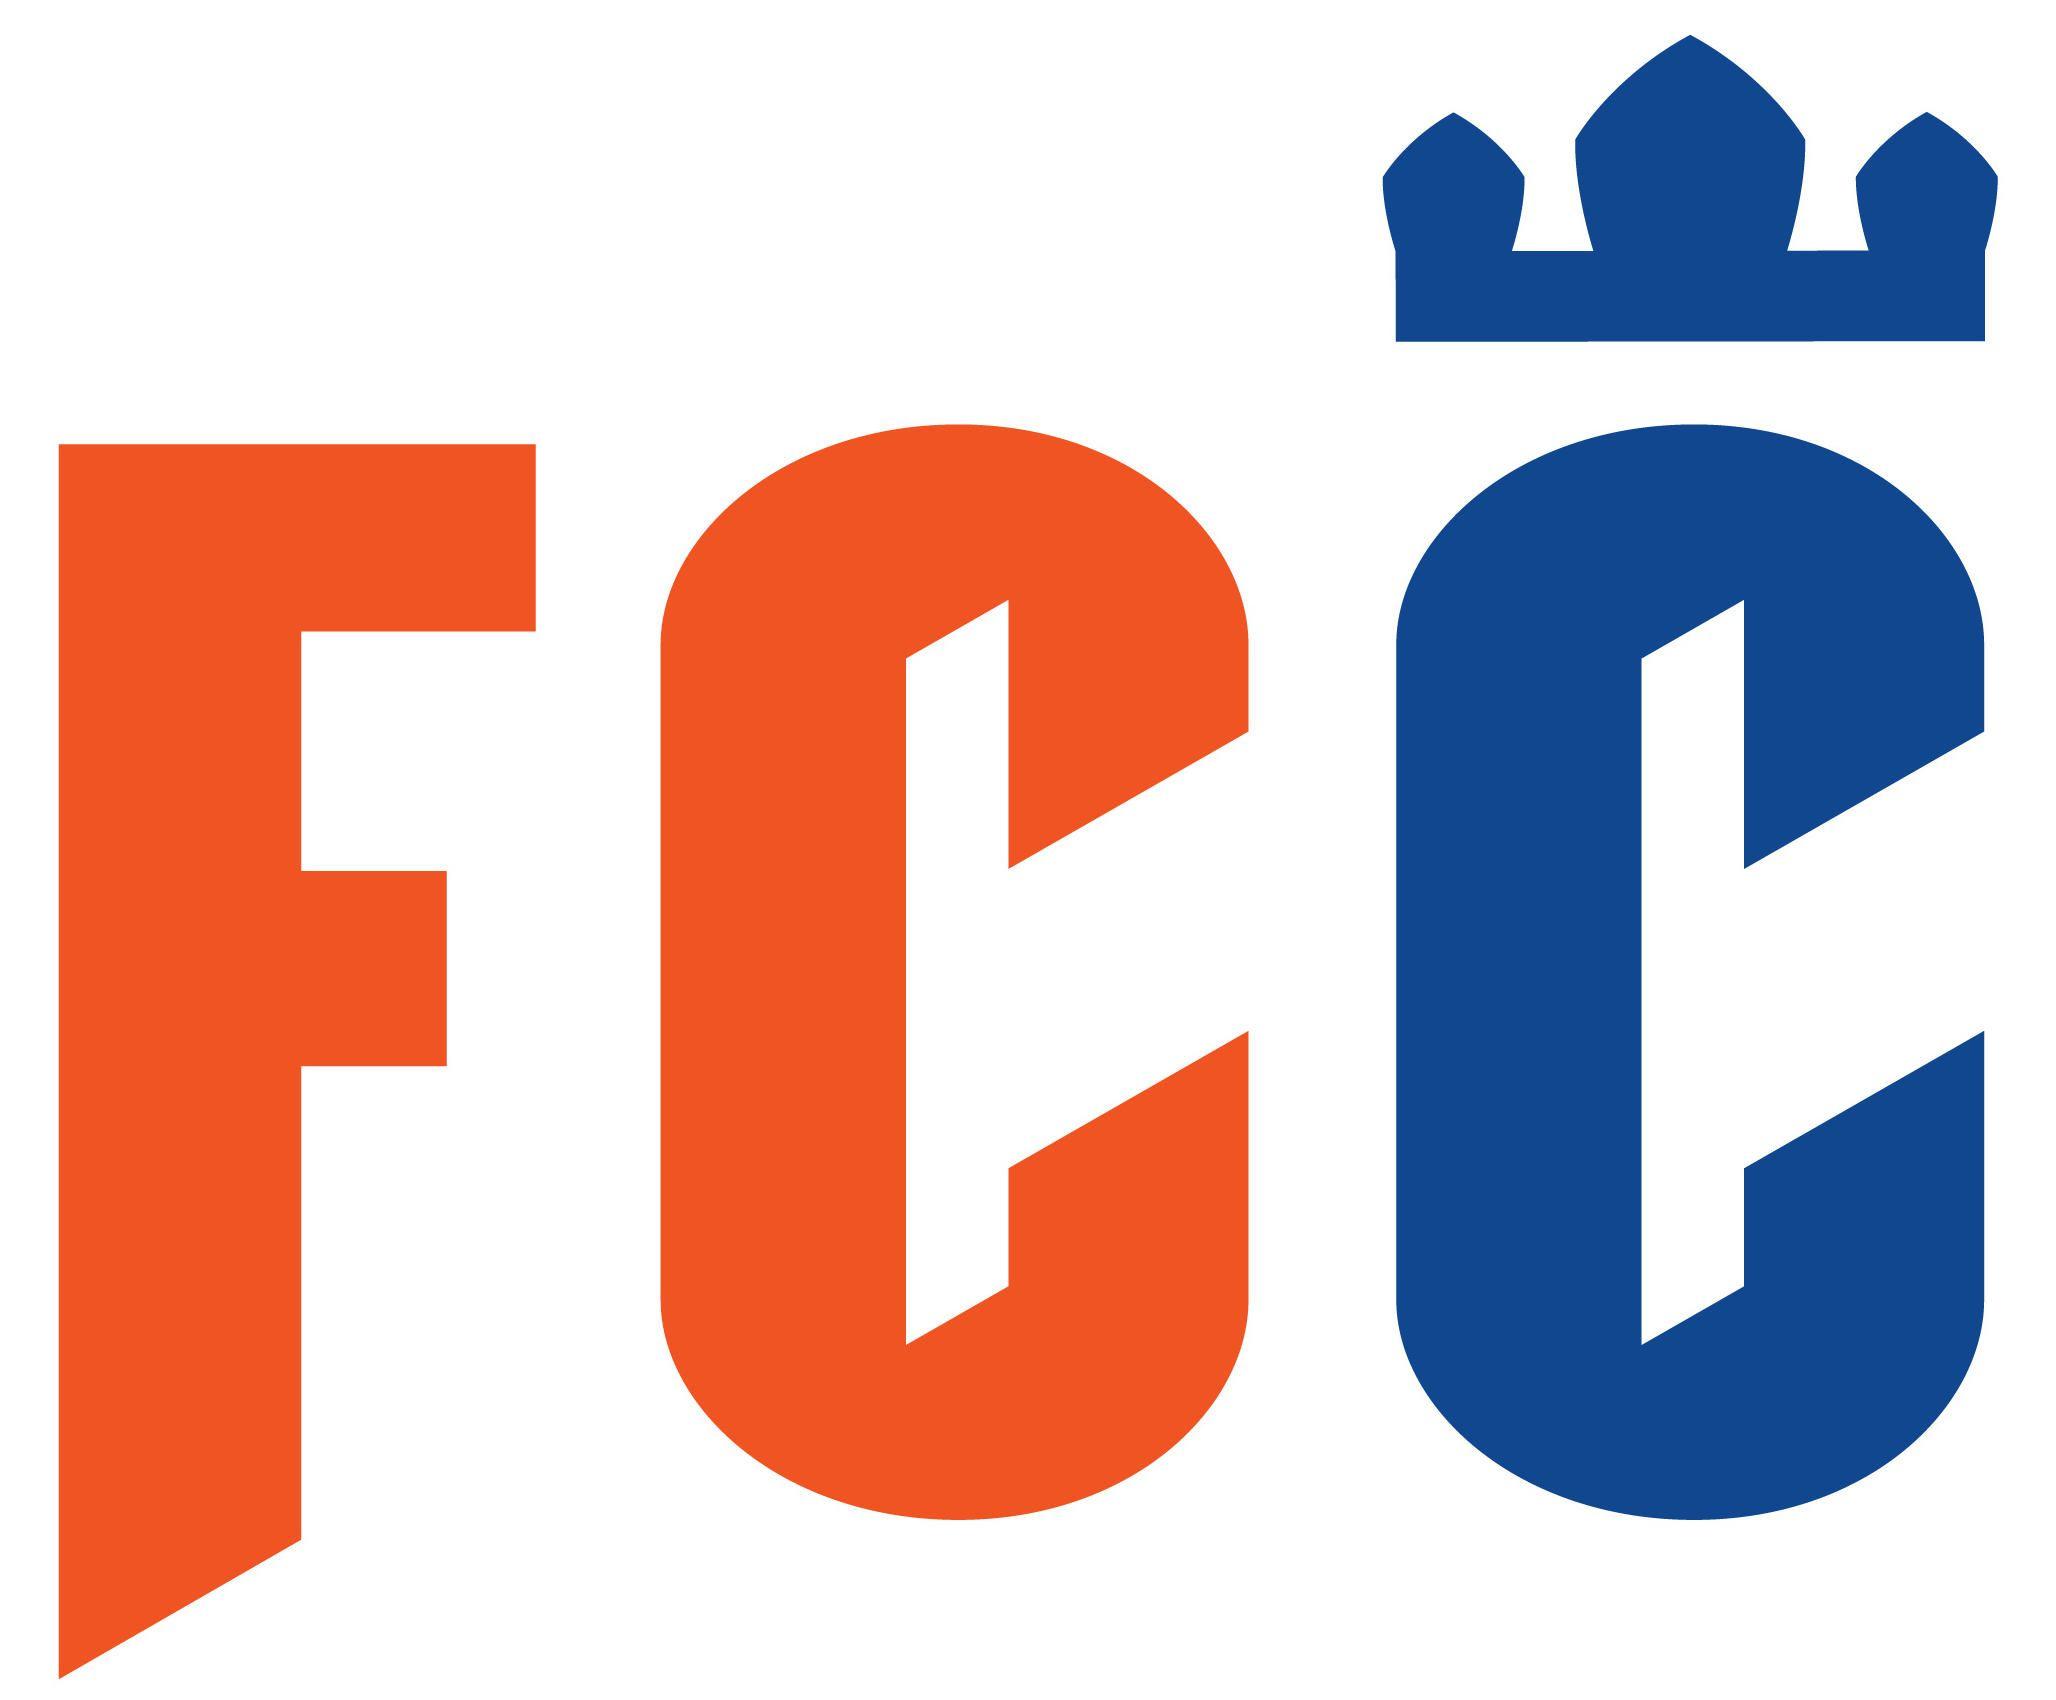 For Red Blue Orange Football Logo - Football Club Cincinnati: Check Out FC Cincinnati's New Branding